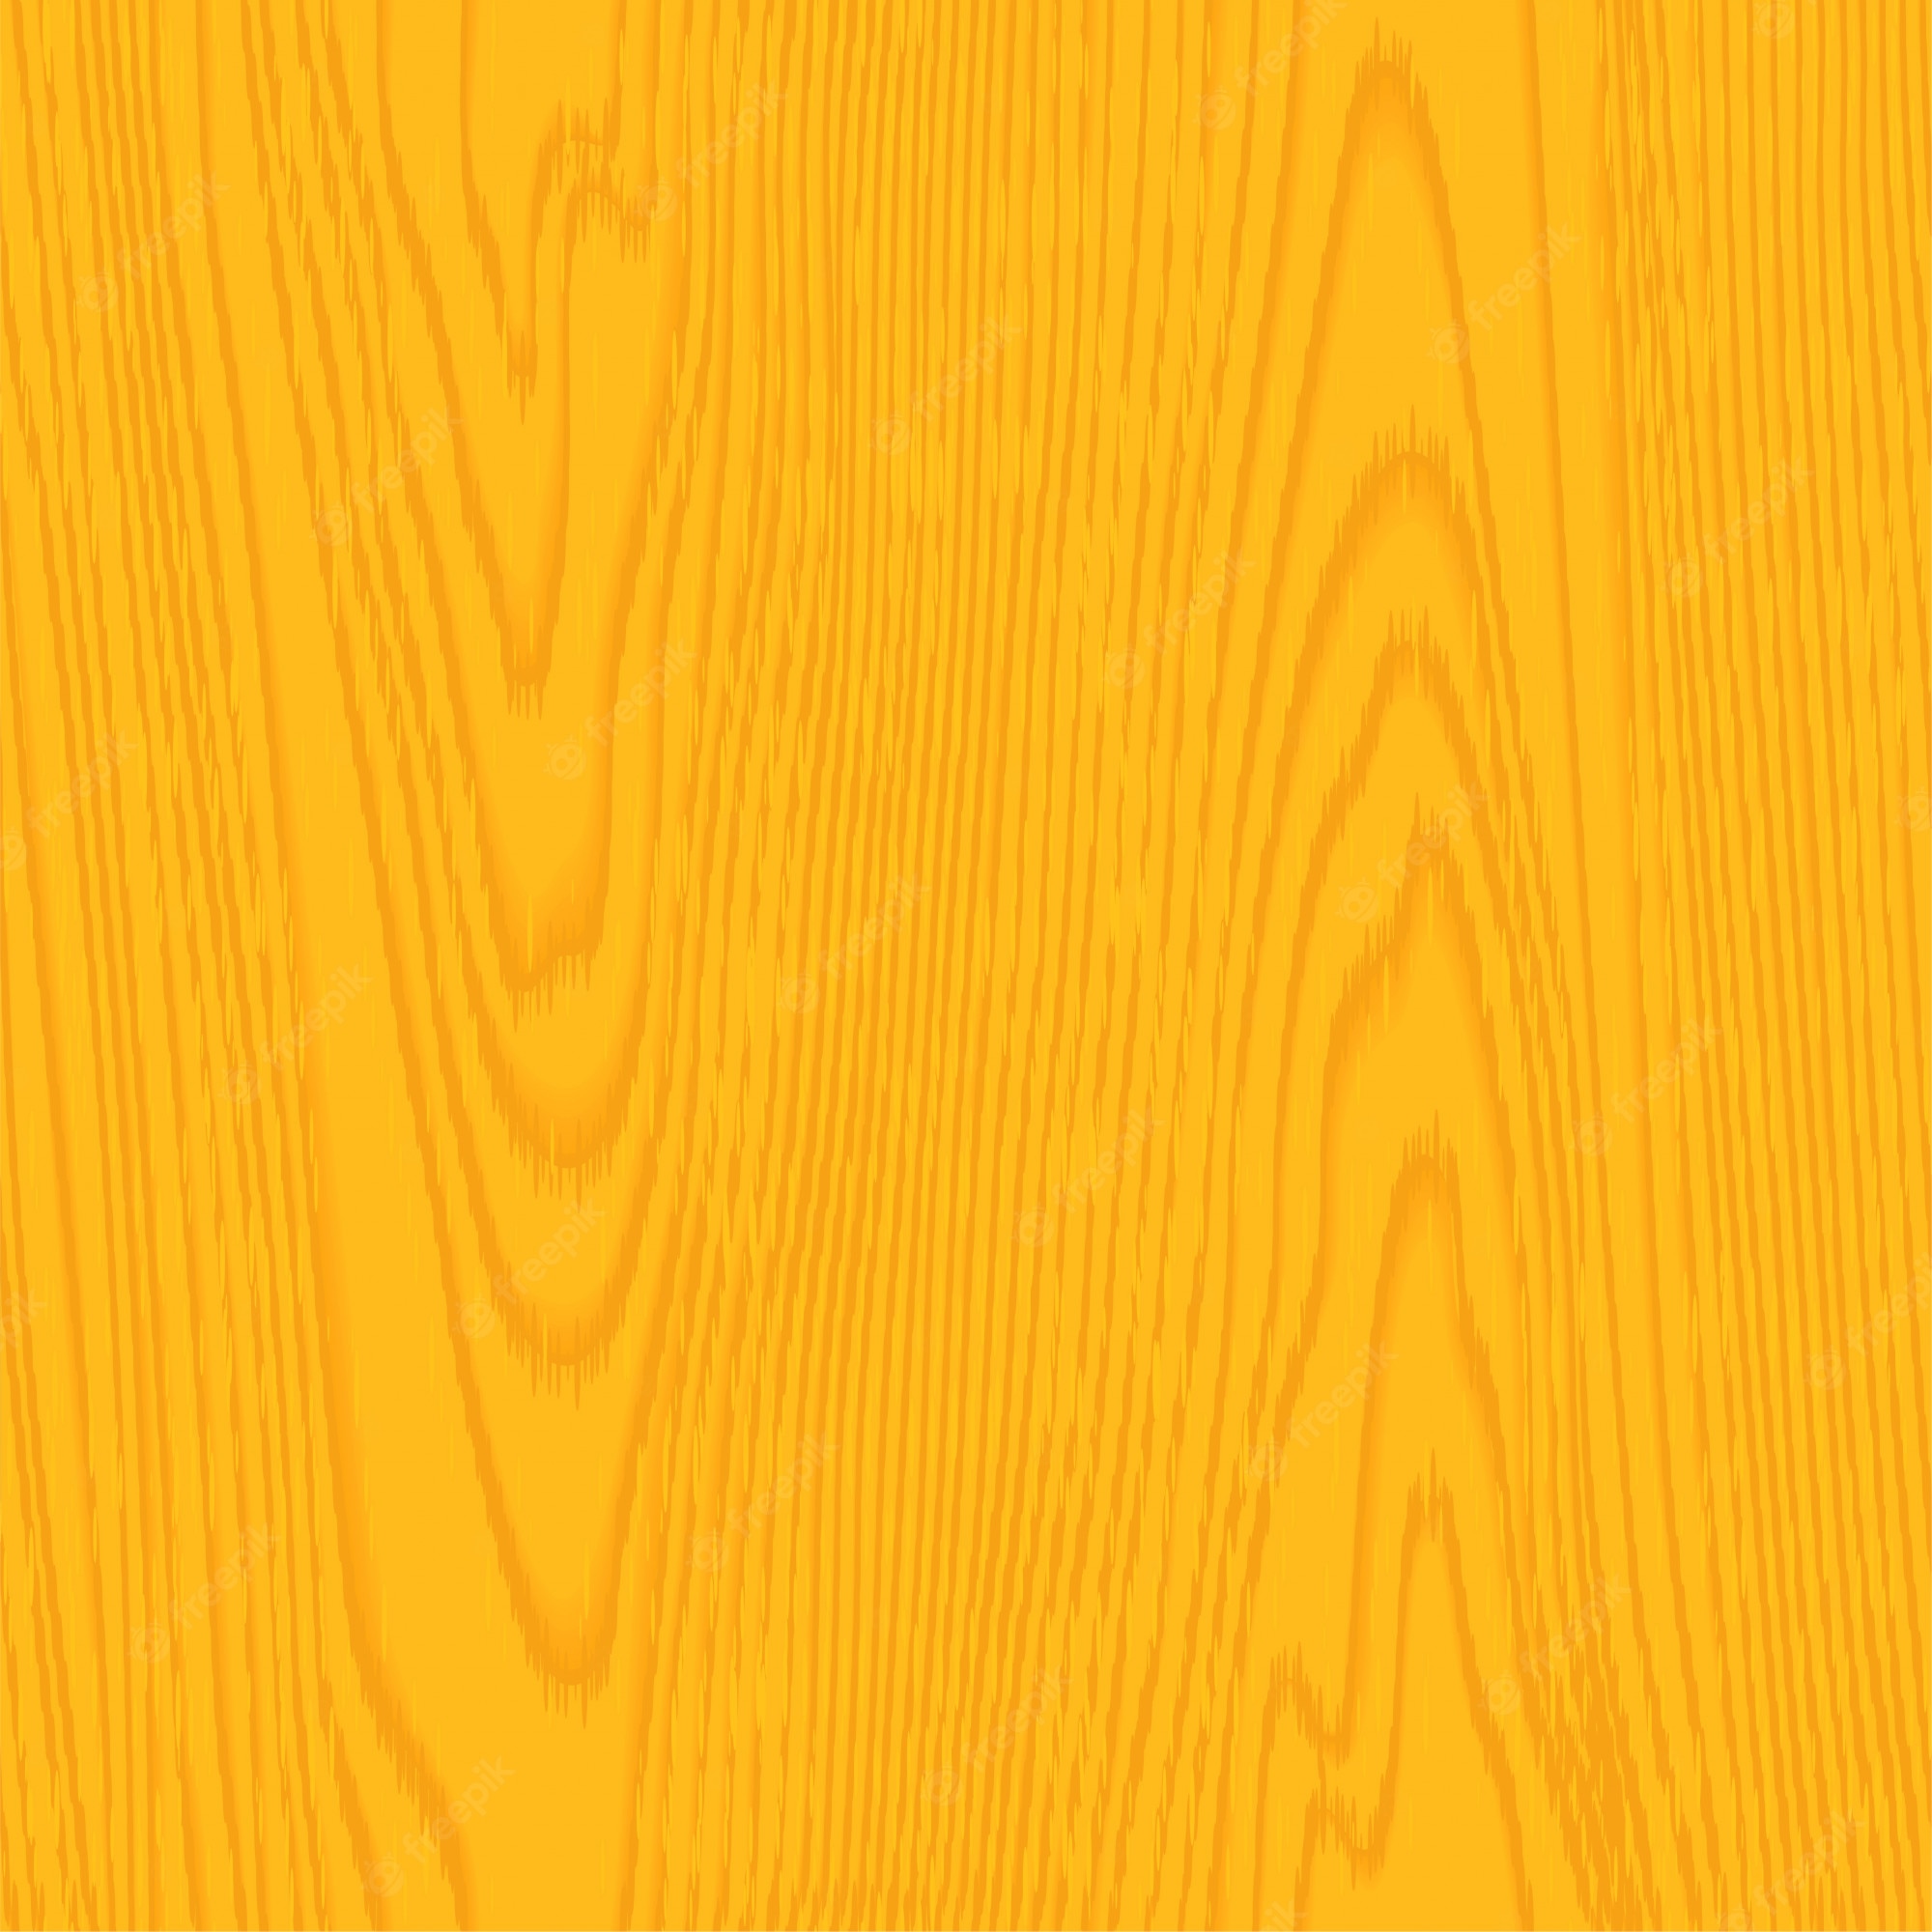 Premium Vector Yellow Wooden Seamless Pattern Illustration